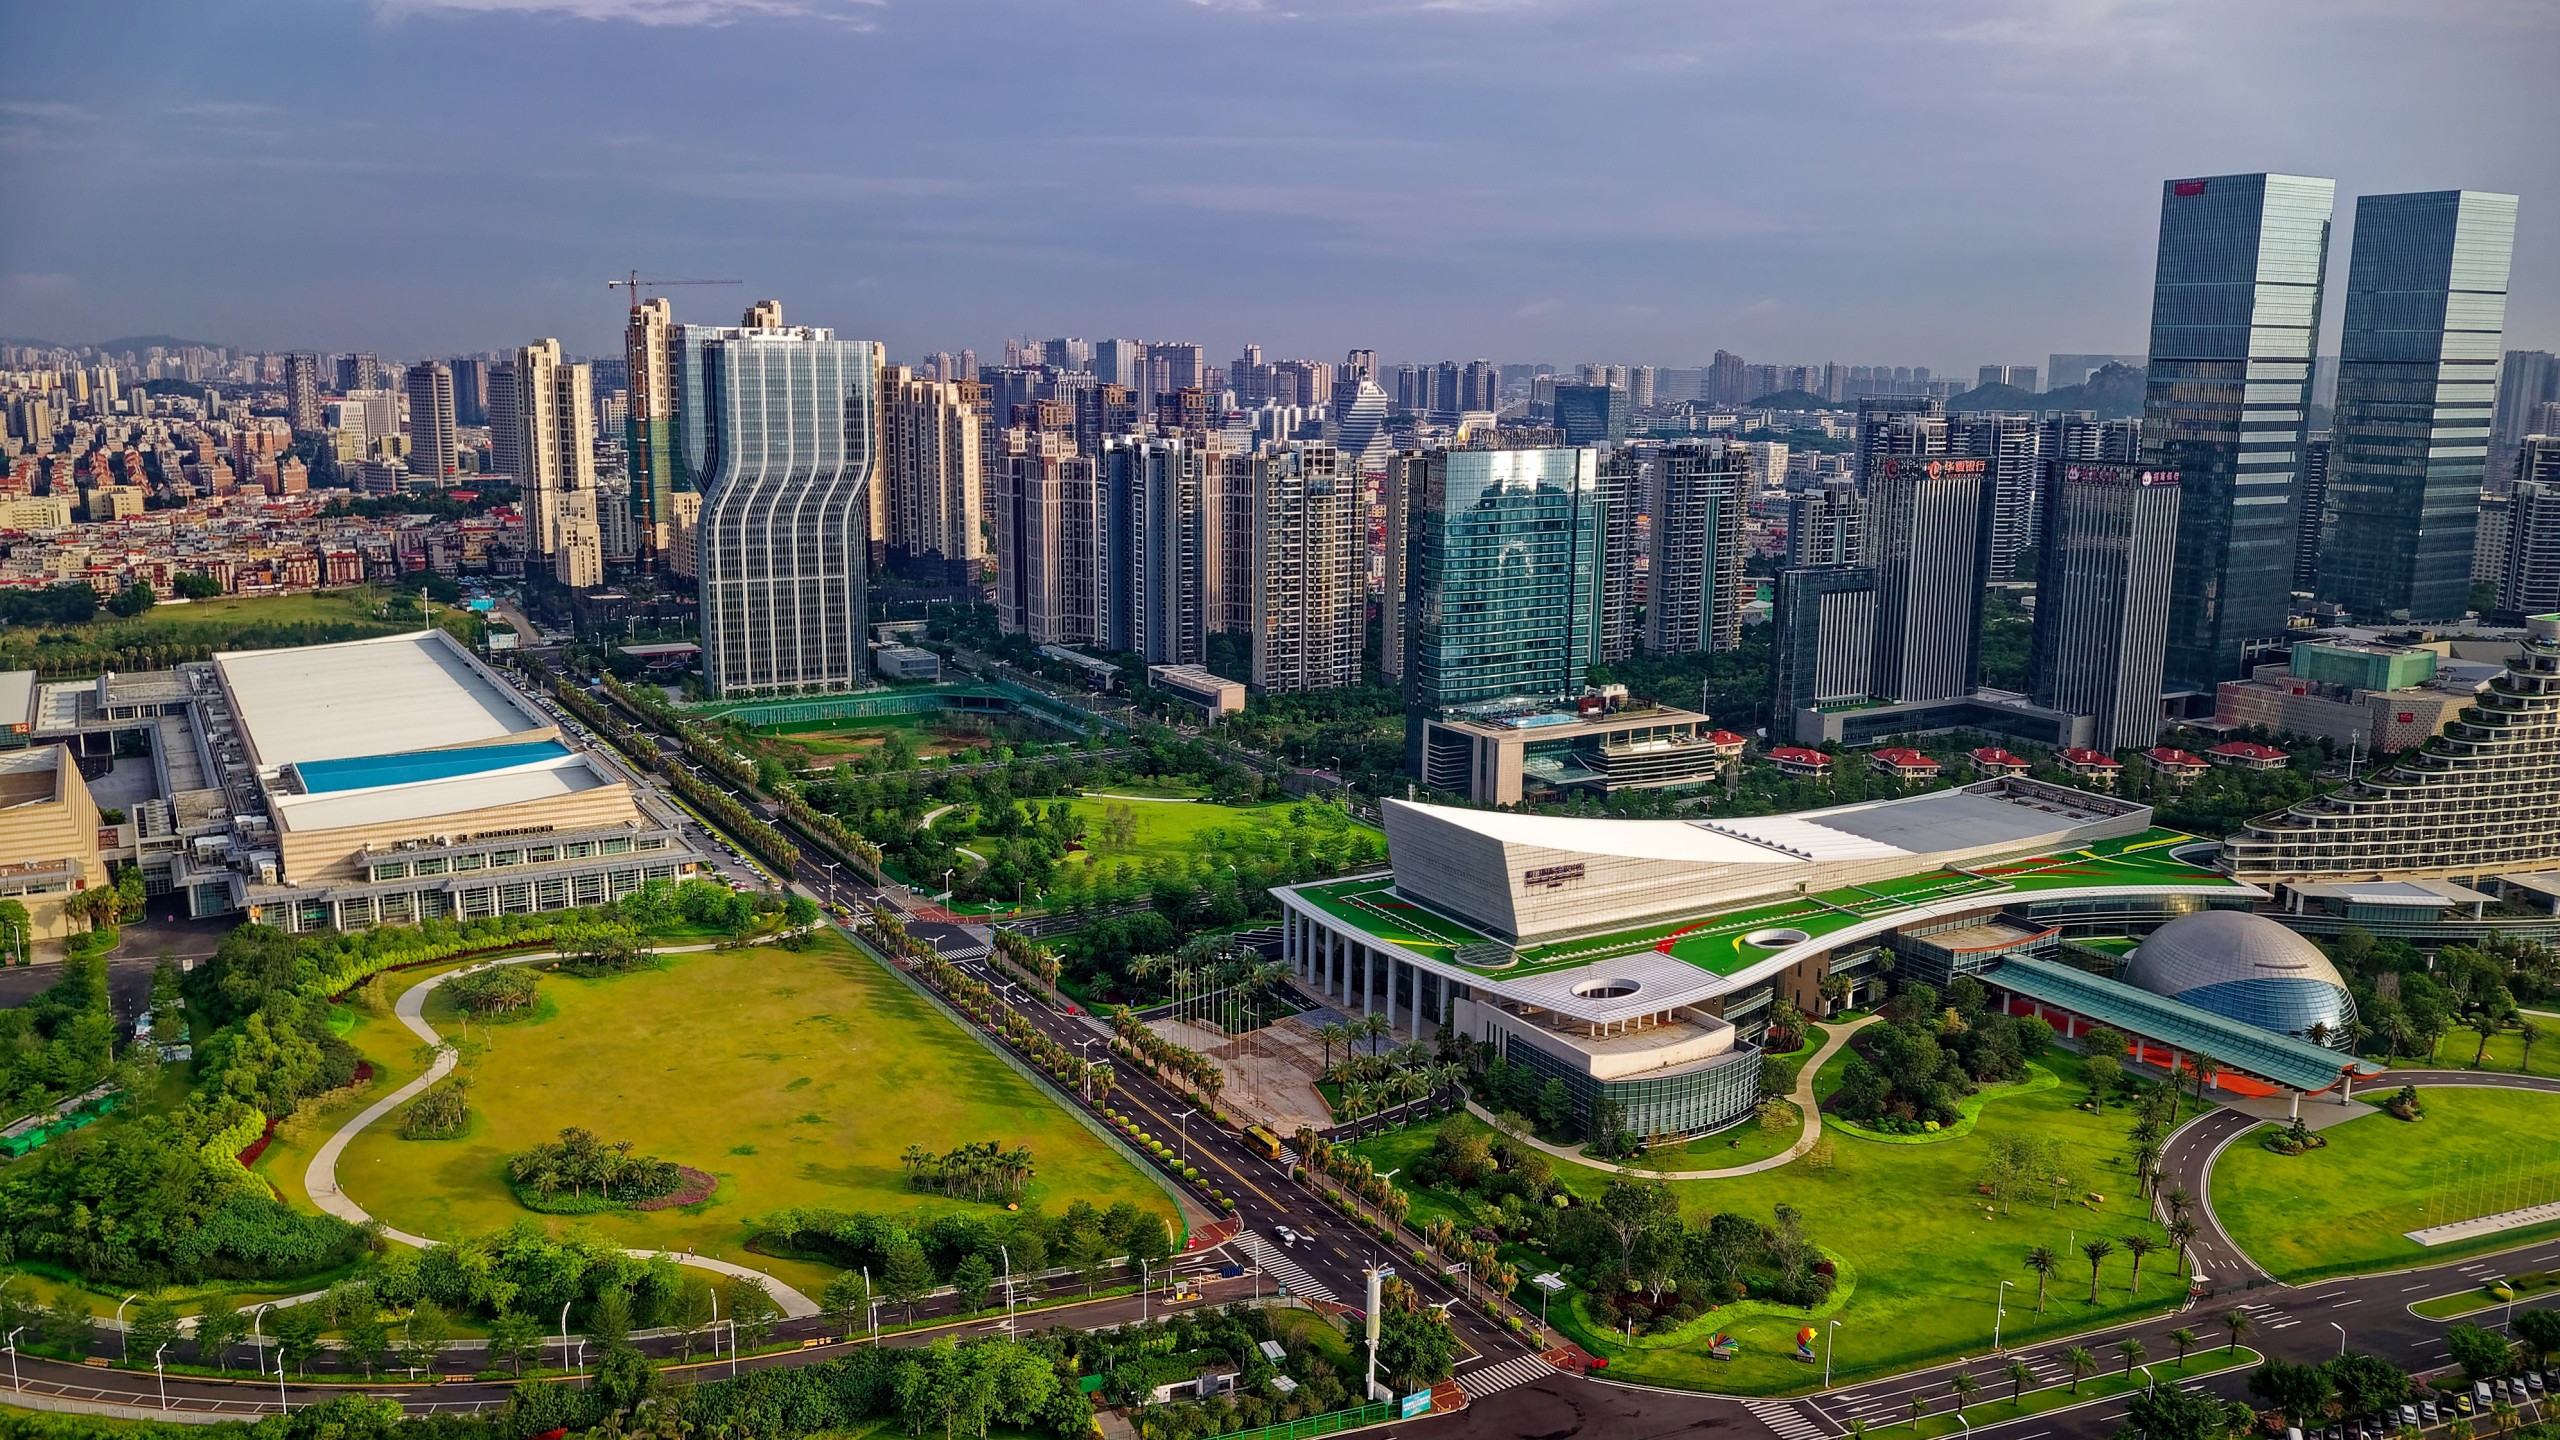 Download 2560x1440 China Xiamen, Skyscrapers, Stadium, Green, Modern Architecture, Drone View Wallpaper for iMac 27 inch